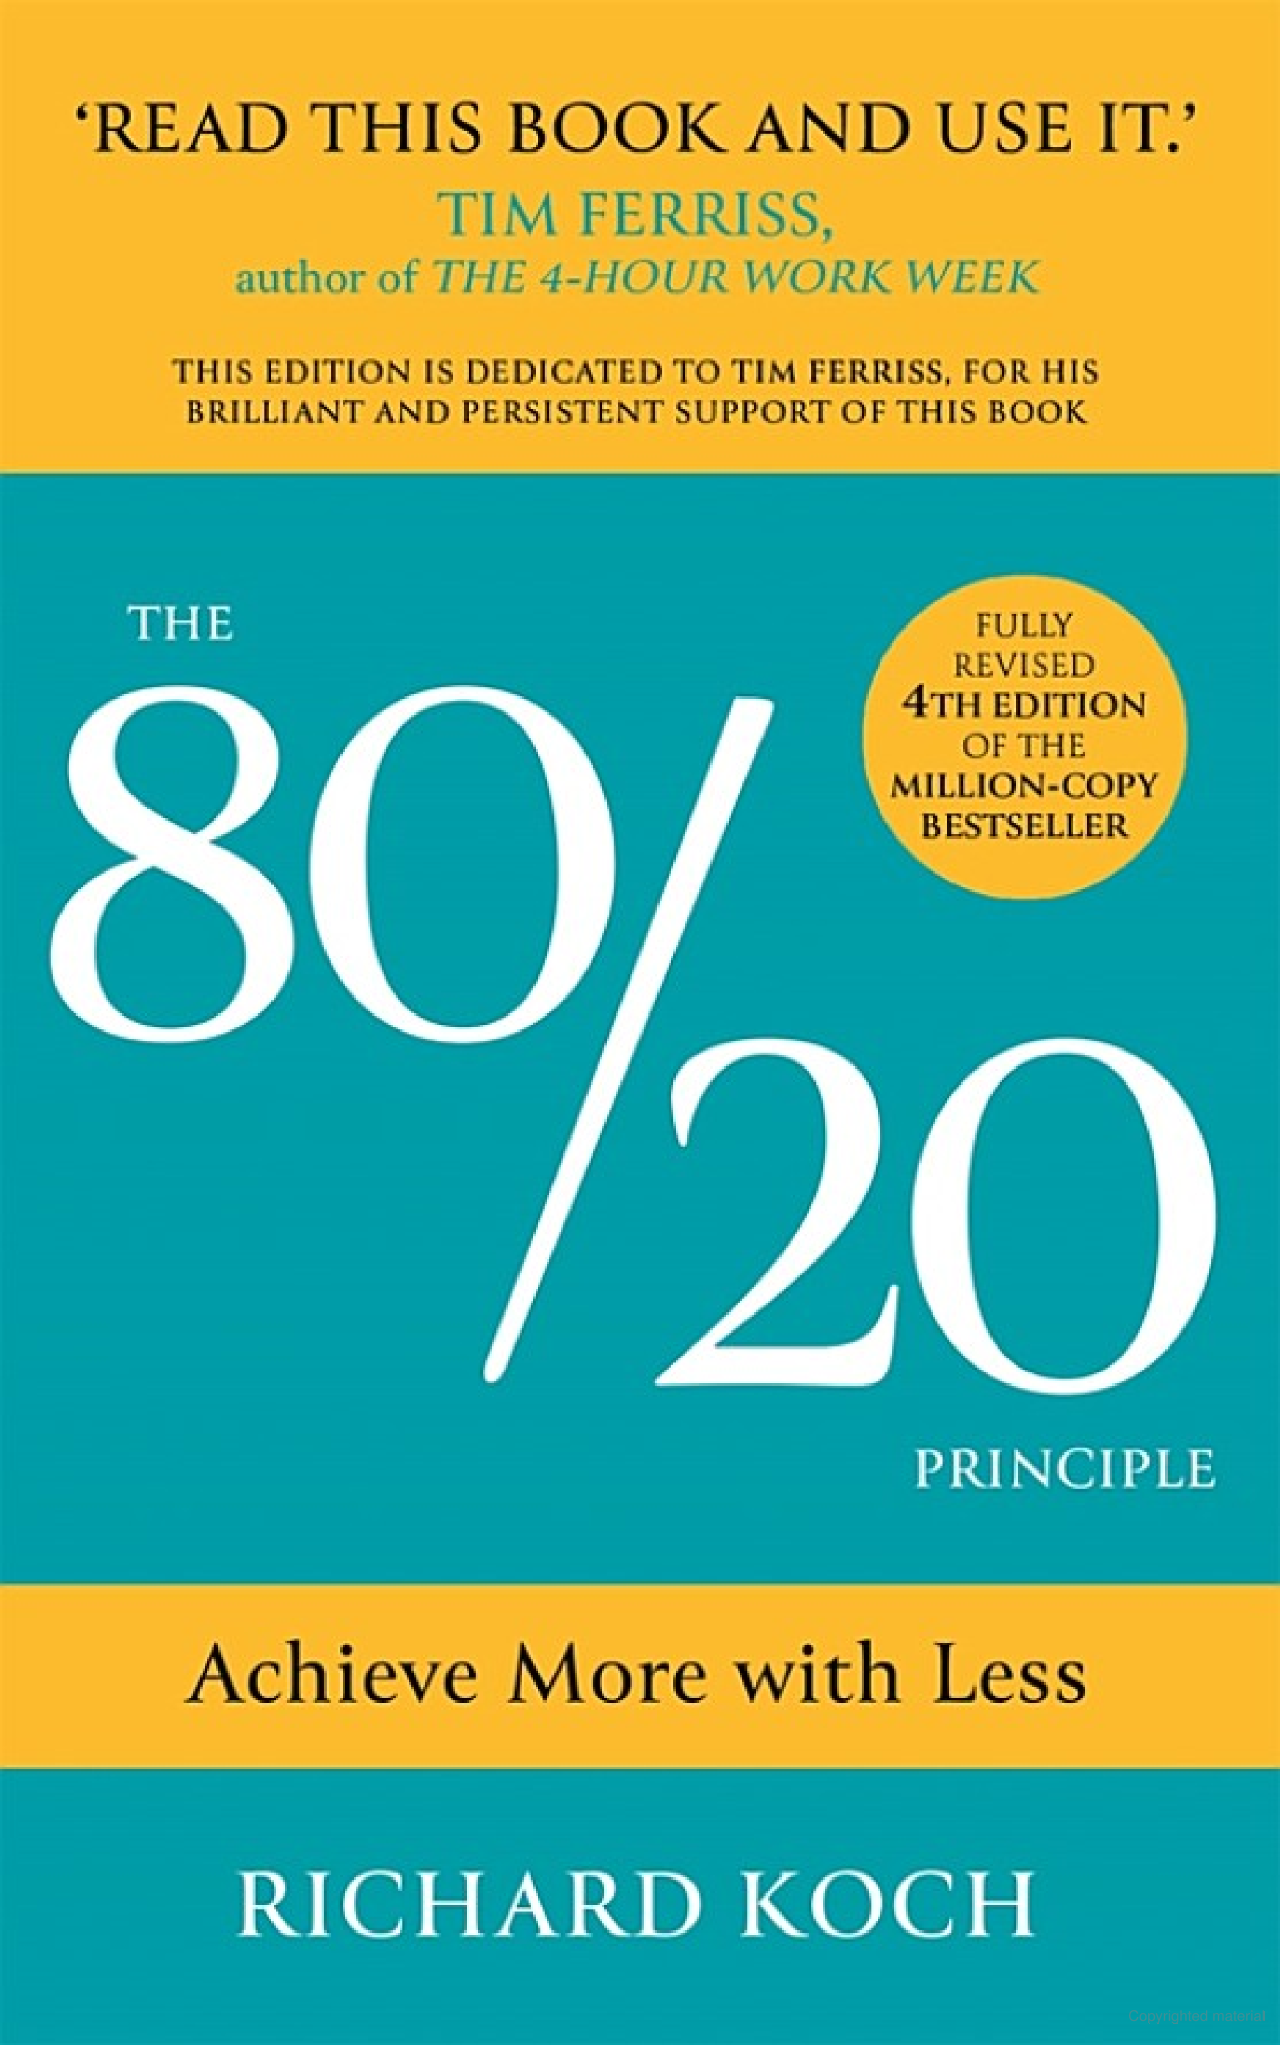 The 80/20 Principle
Book by Richard Koch